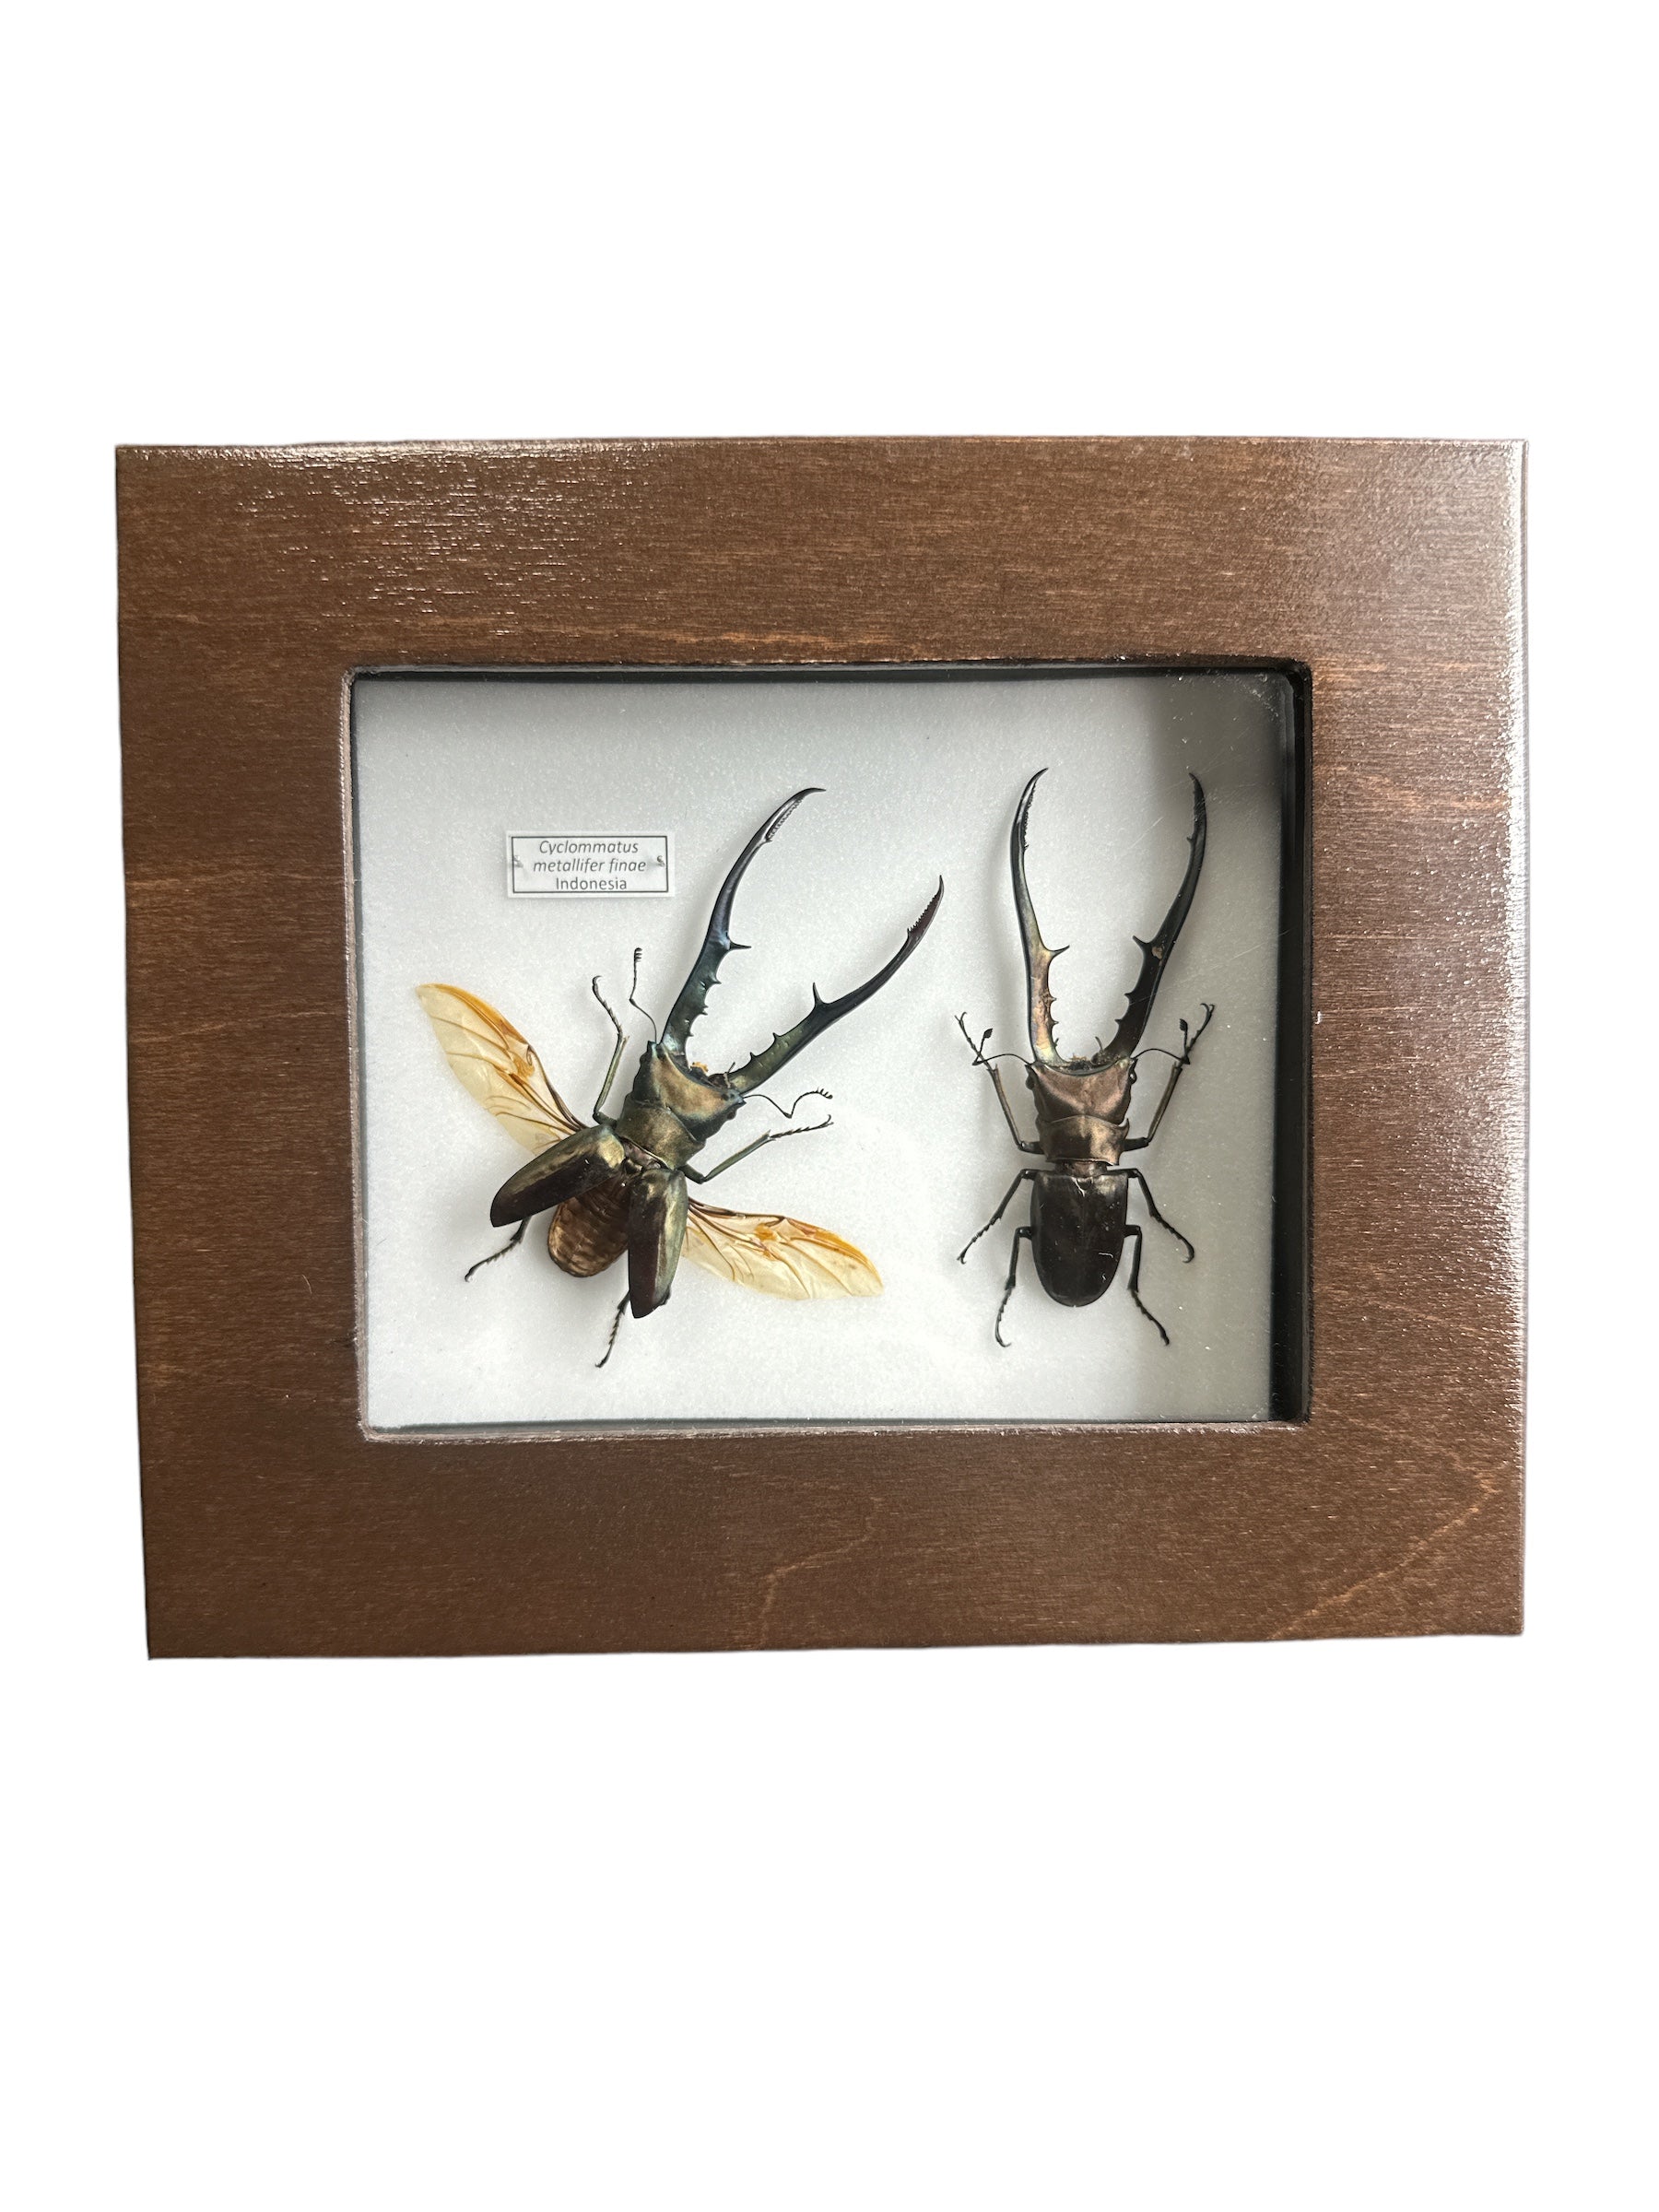 Metallic Stag Beetle x2 (Cyclomnatus metallifer finae) - 4x5" Frame